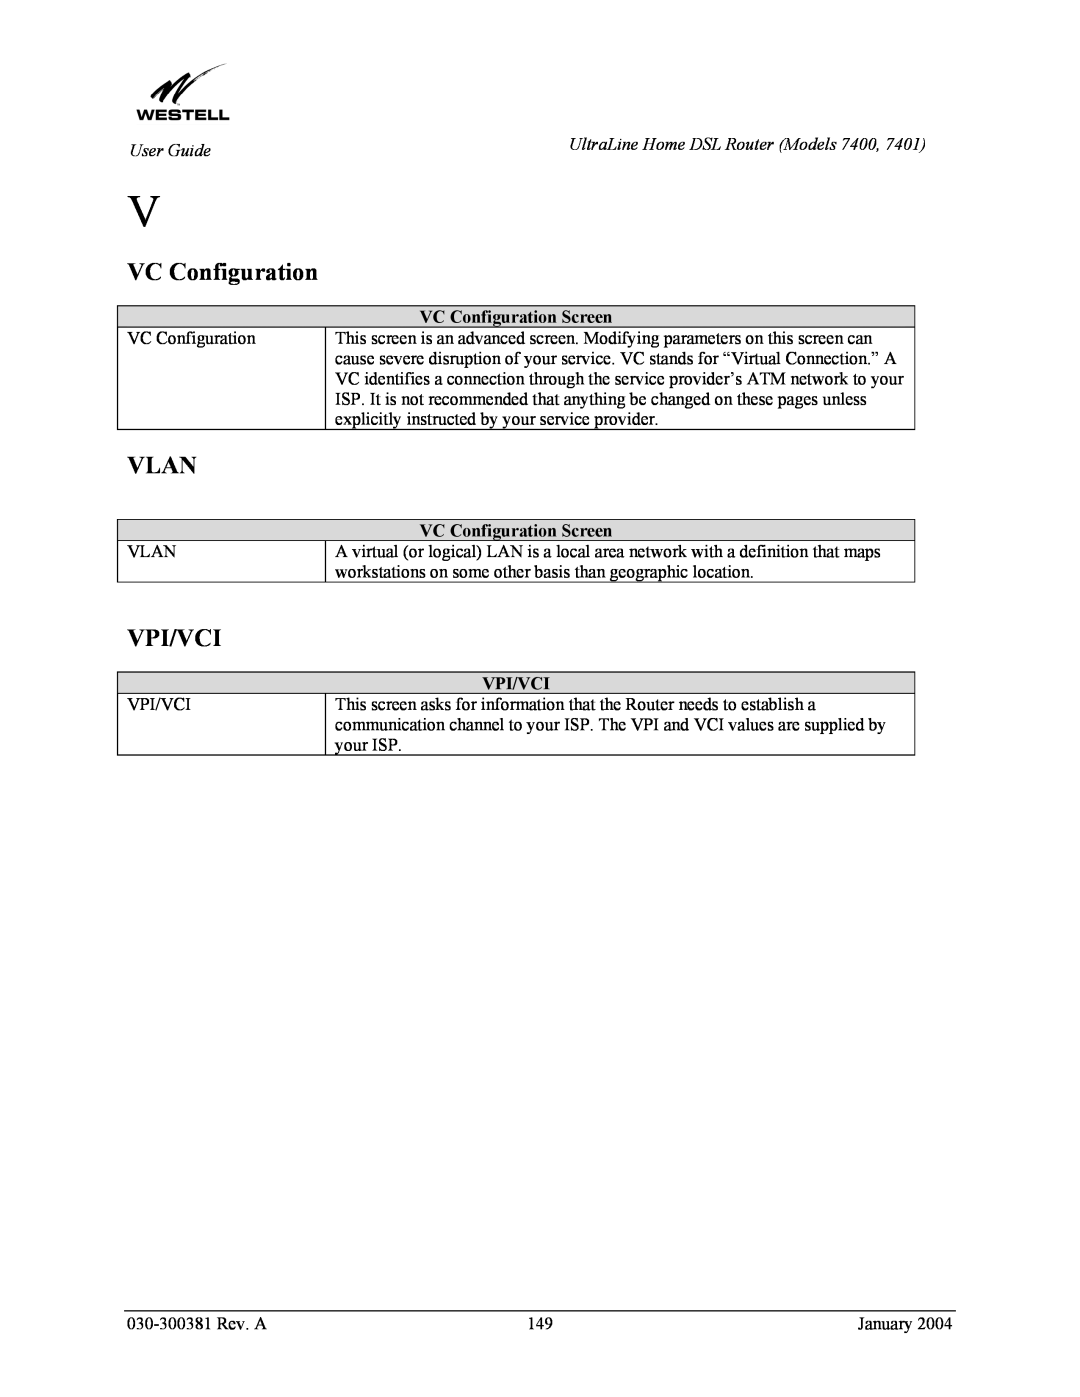 Westell Technologies 7400, 7401 manual Vlan, Vpi/Vci, VC Configuration Screen 